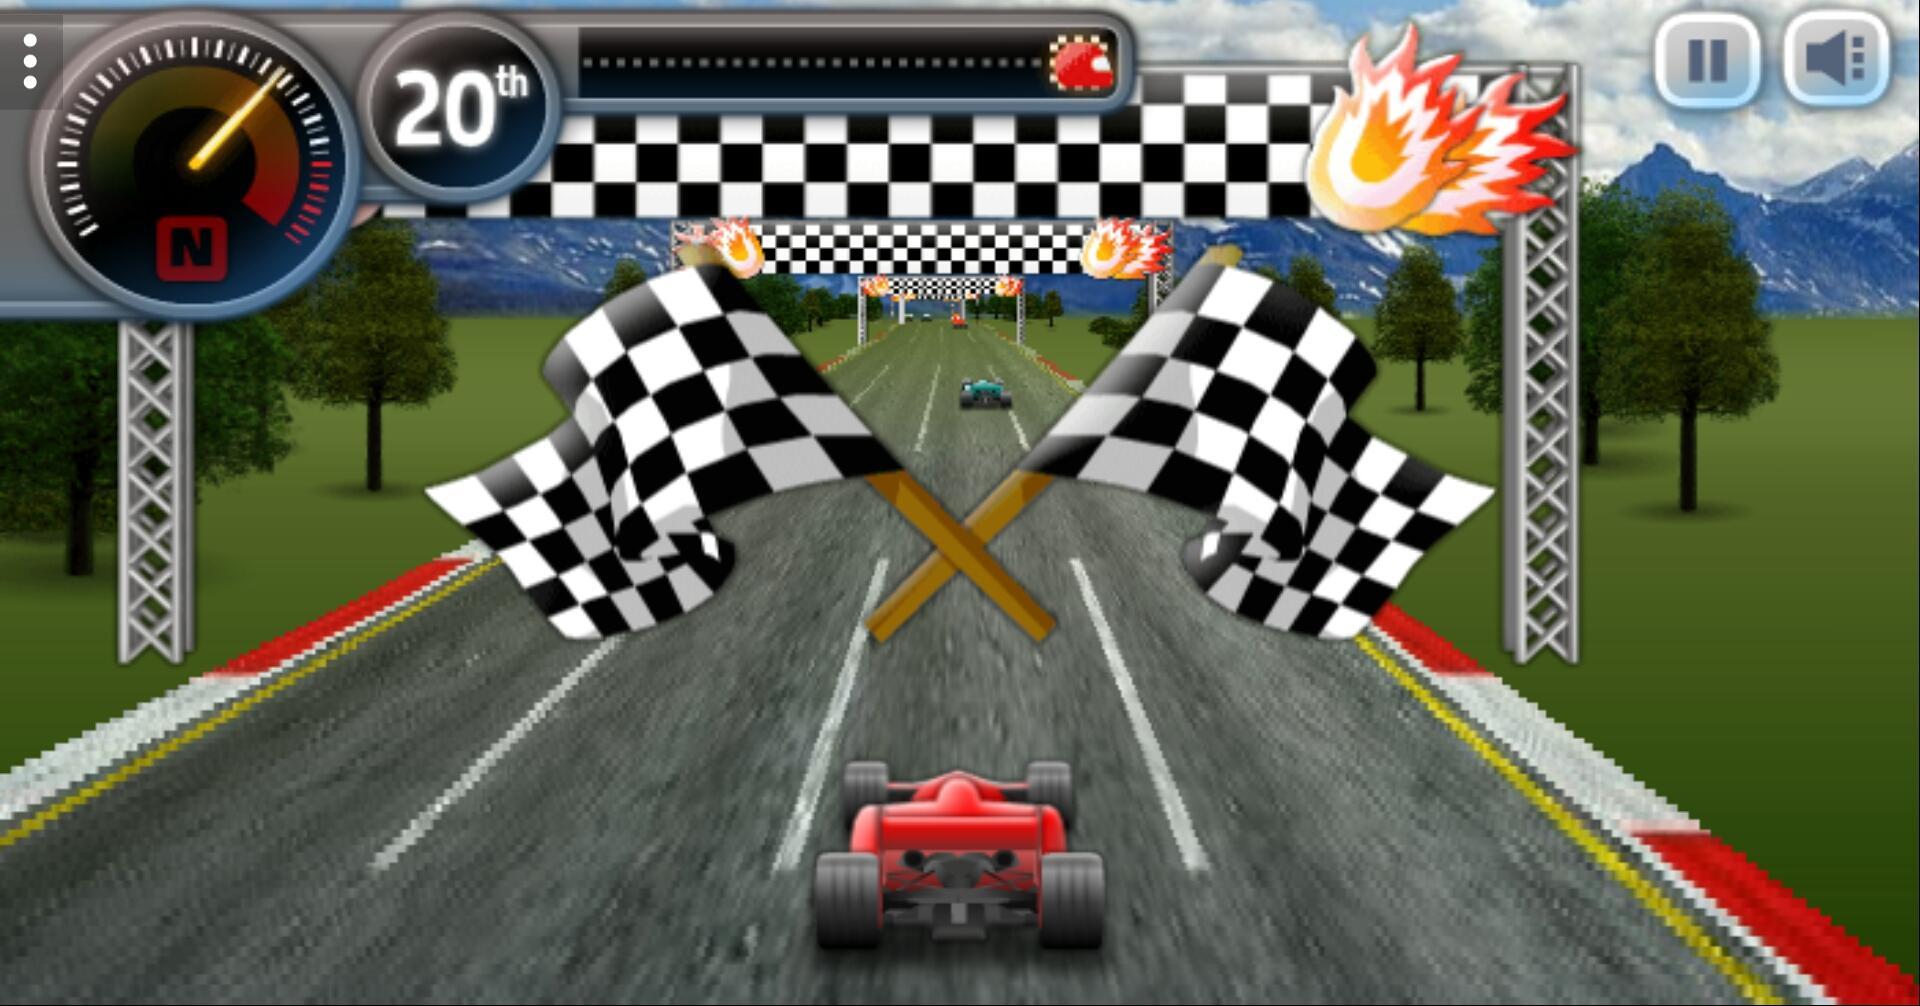 Sprint Club Nitro APK (Android Game) - Free Download